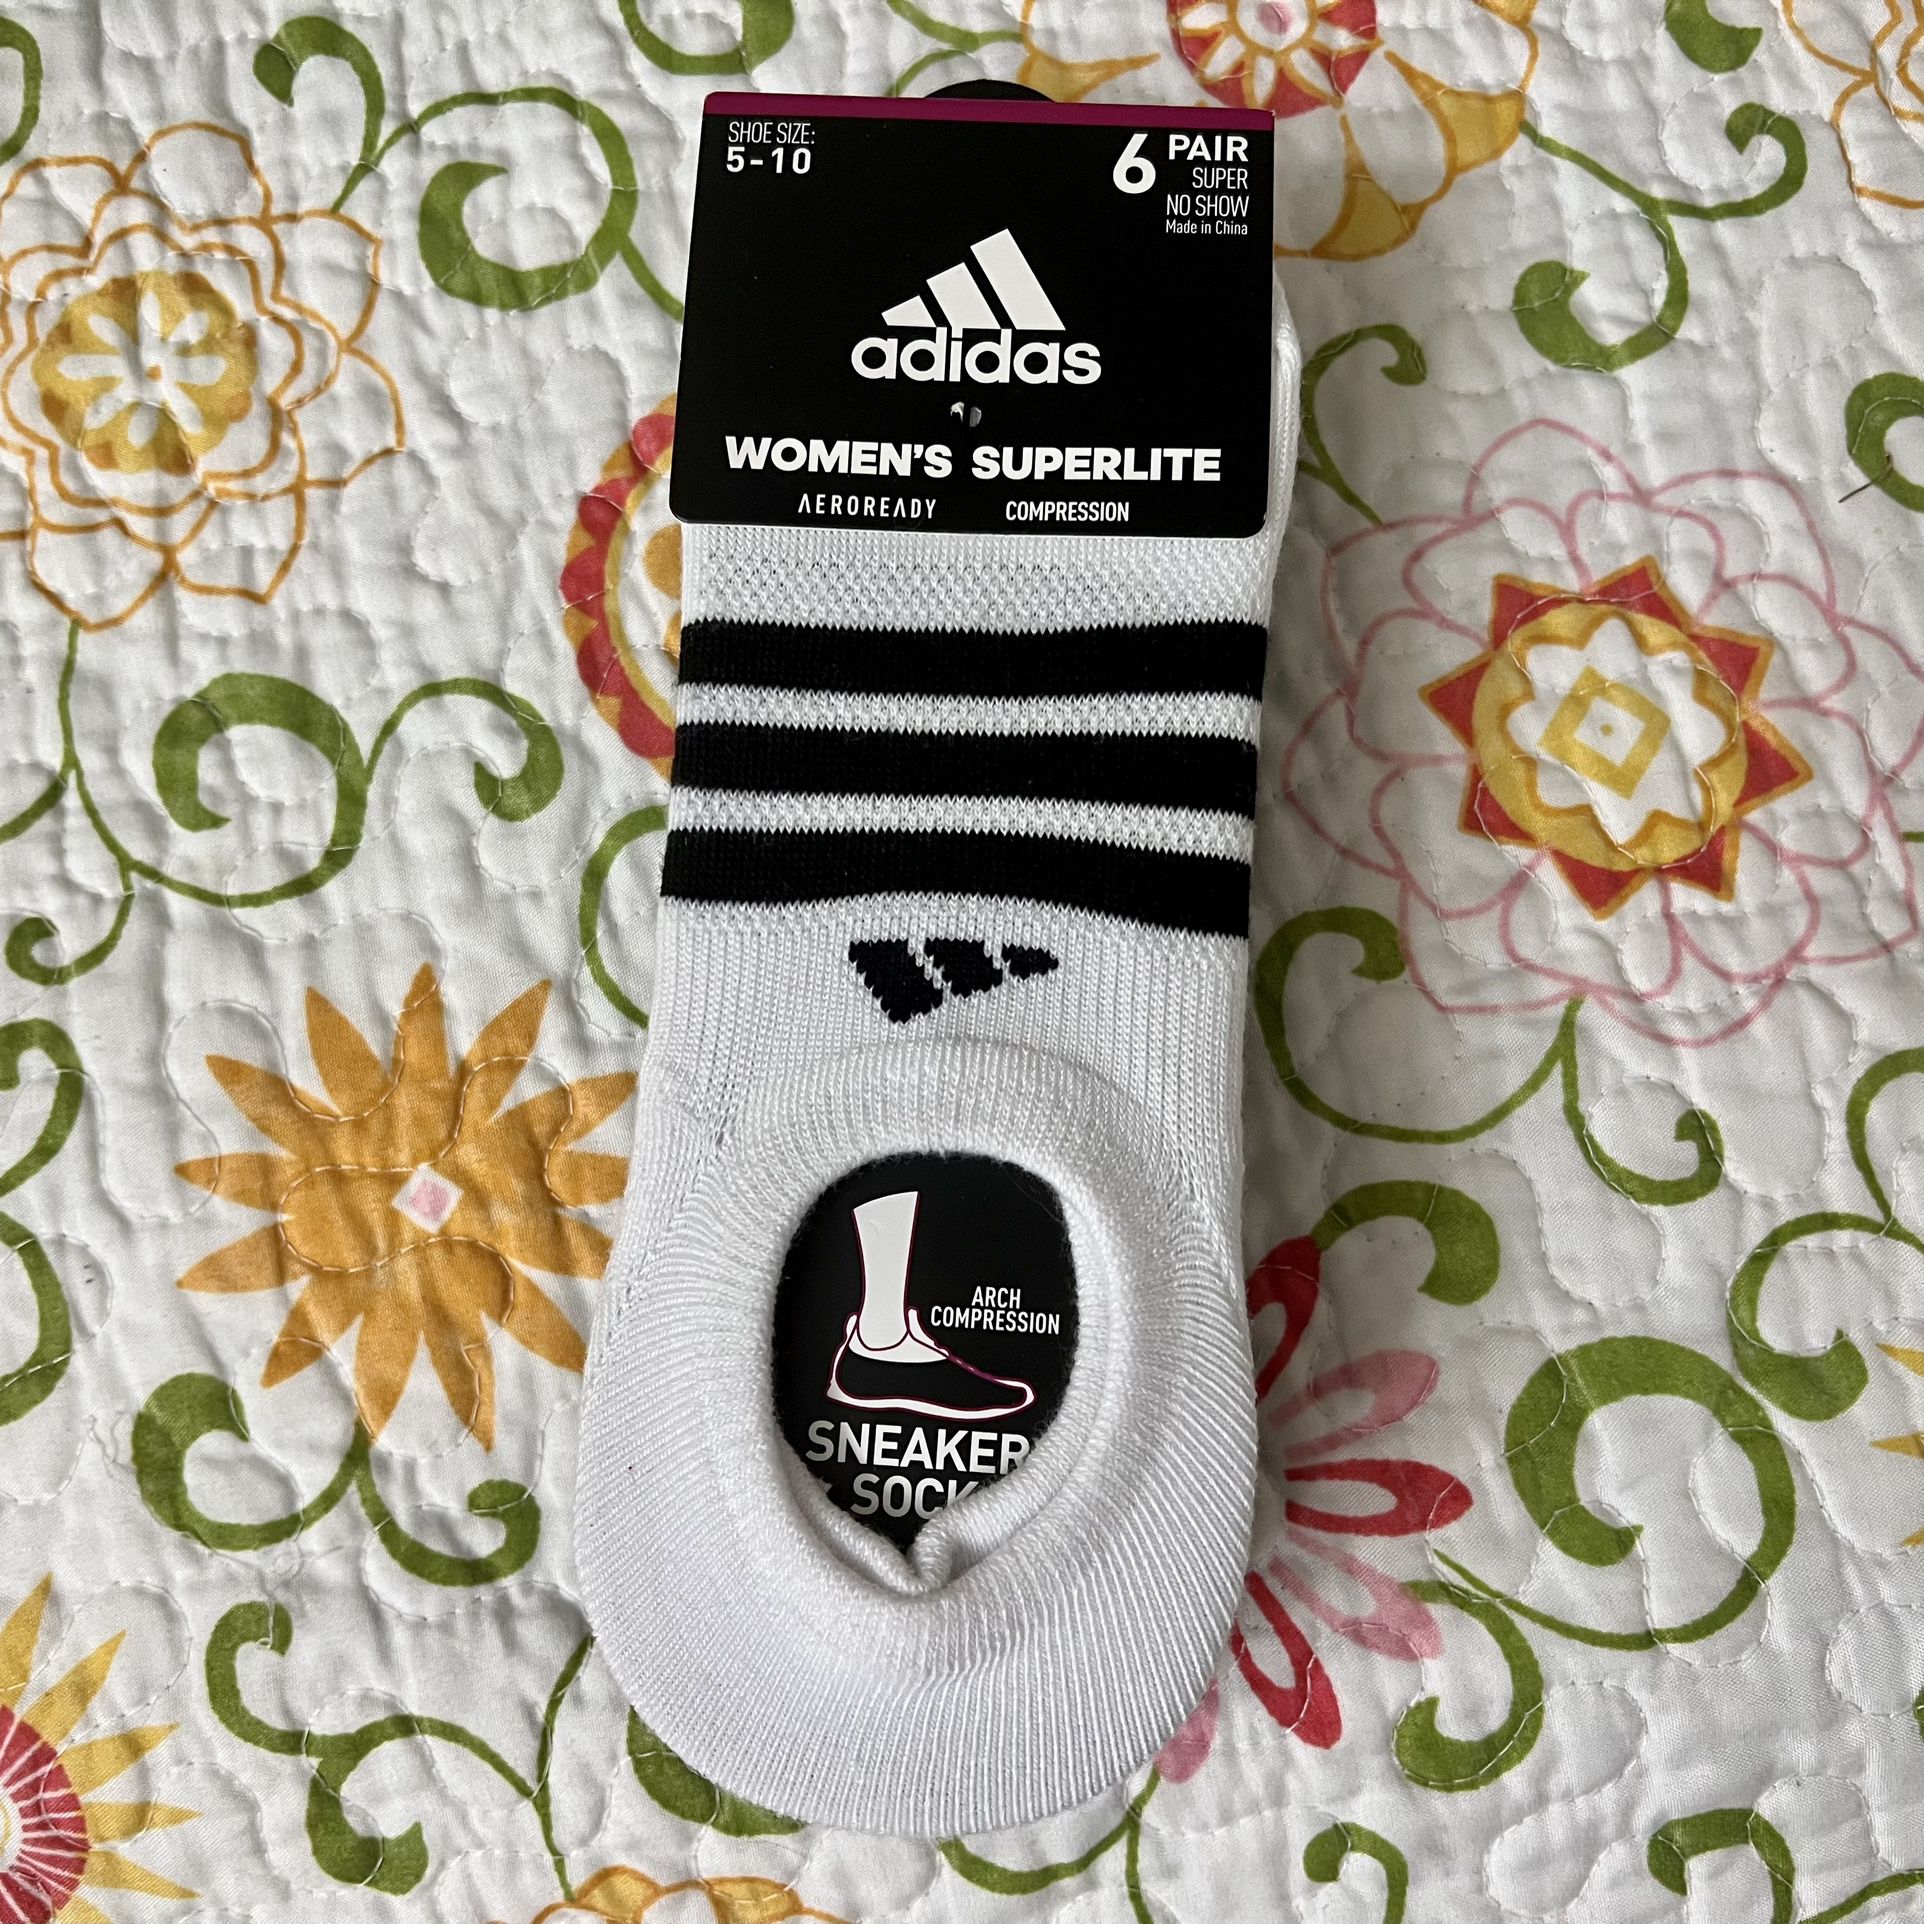 Adidas women’s socks